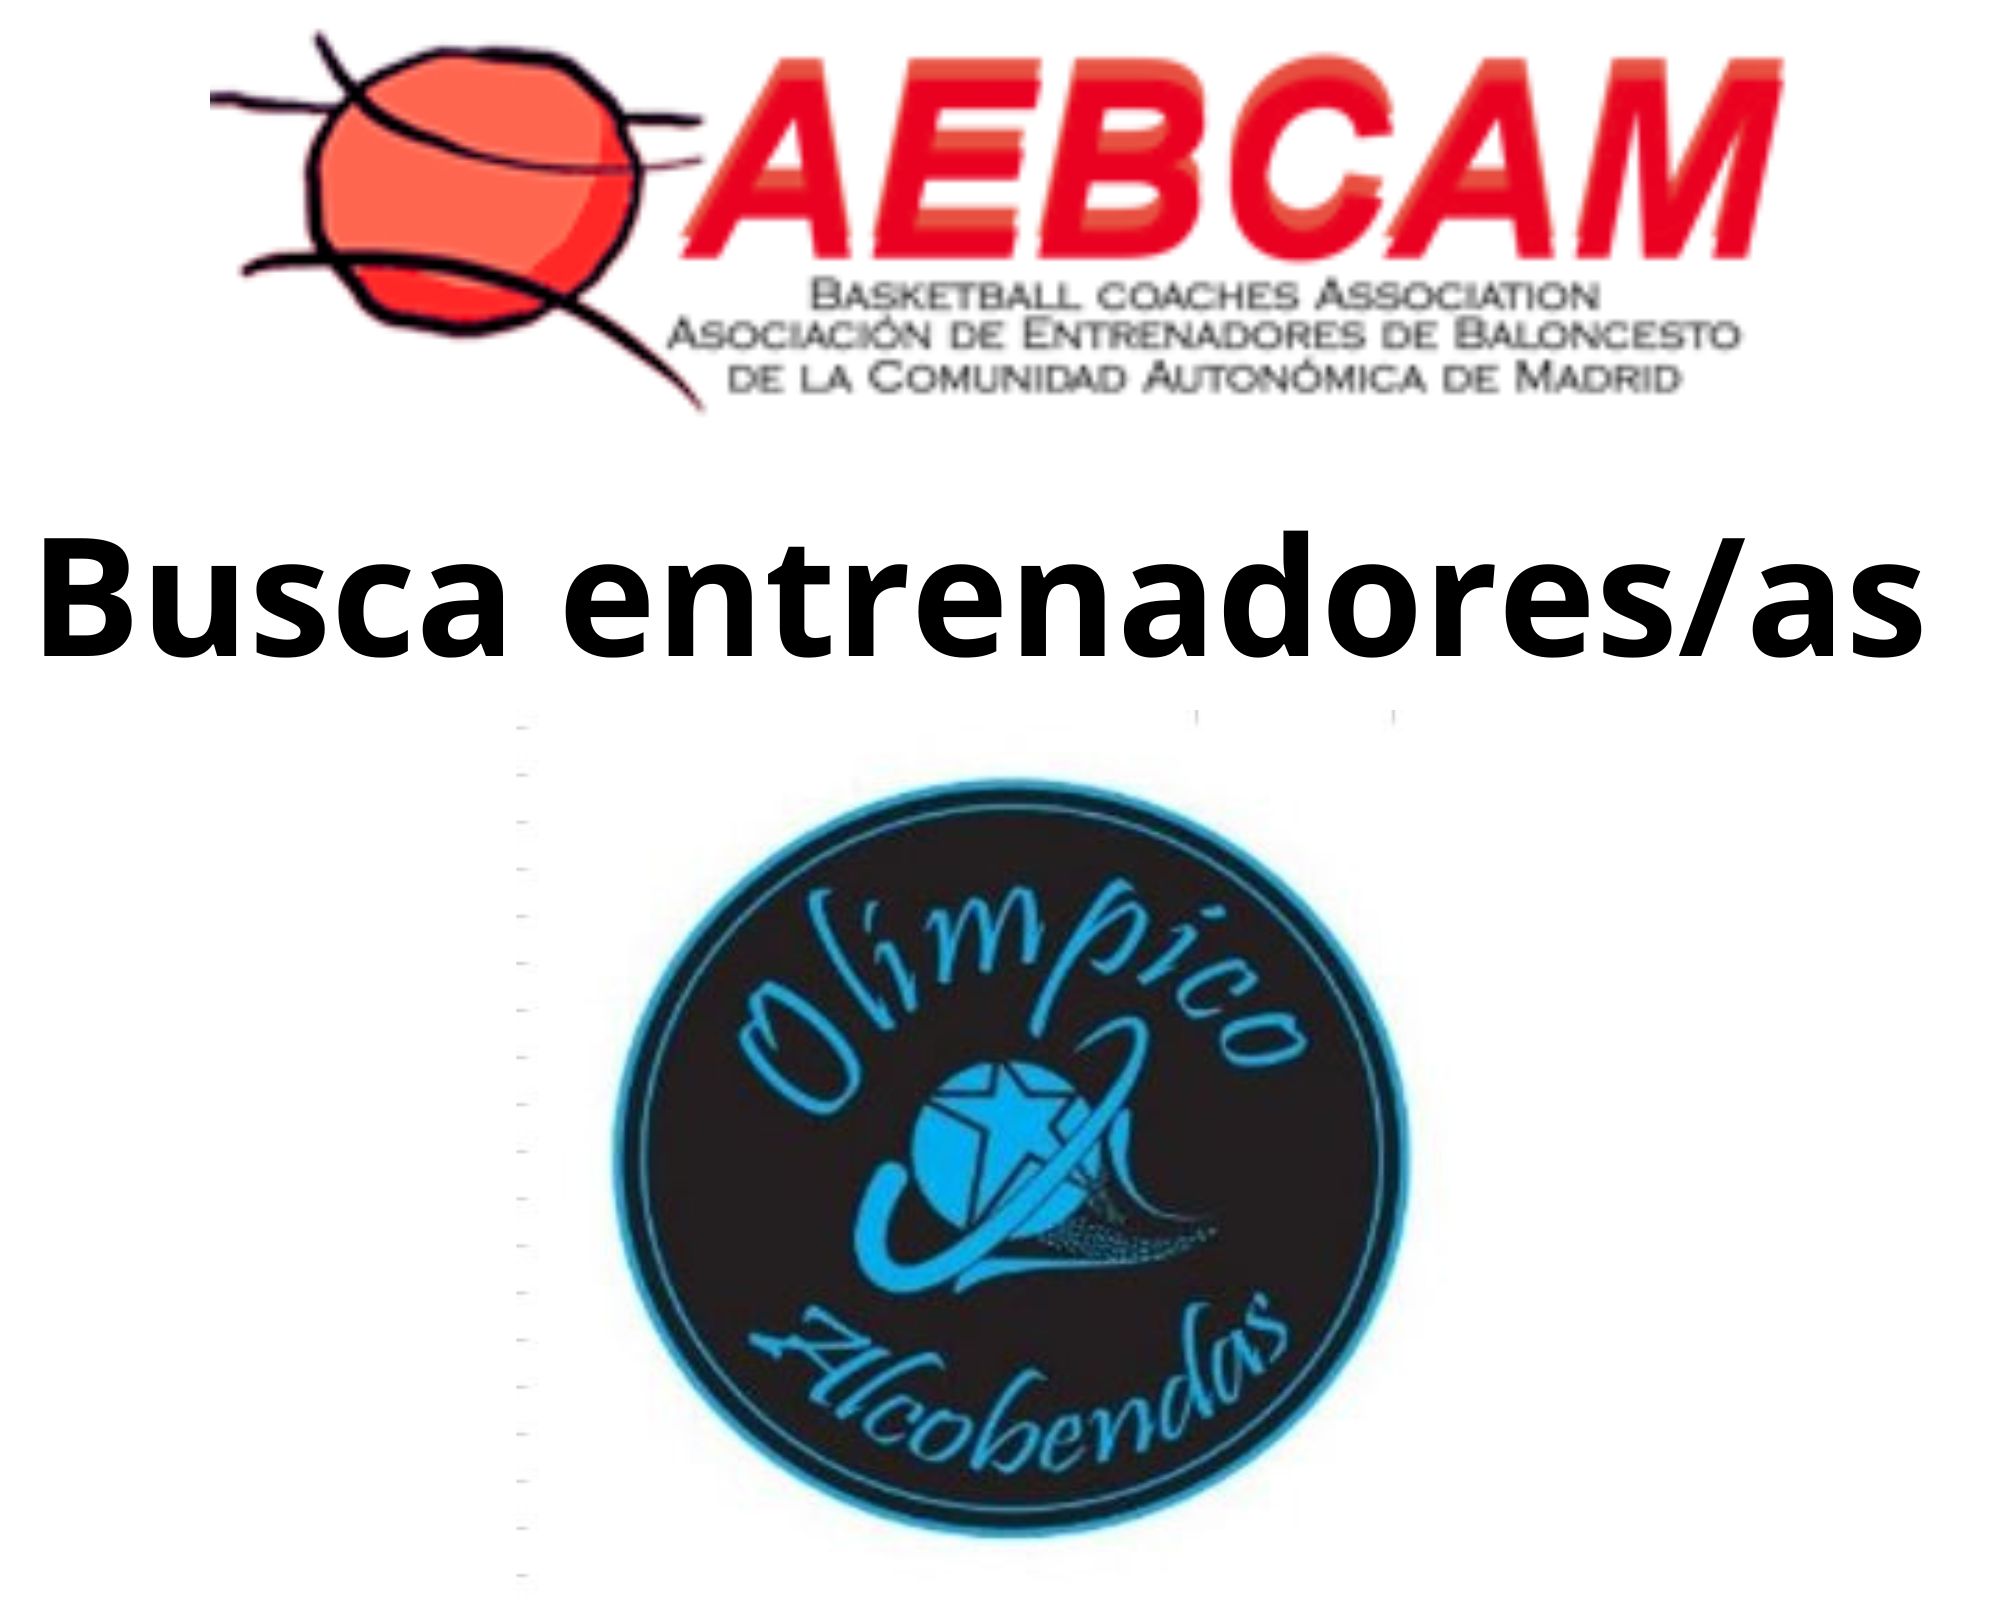 bolsa entrenadores Olimpico alcobendas oferta aebcam